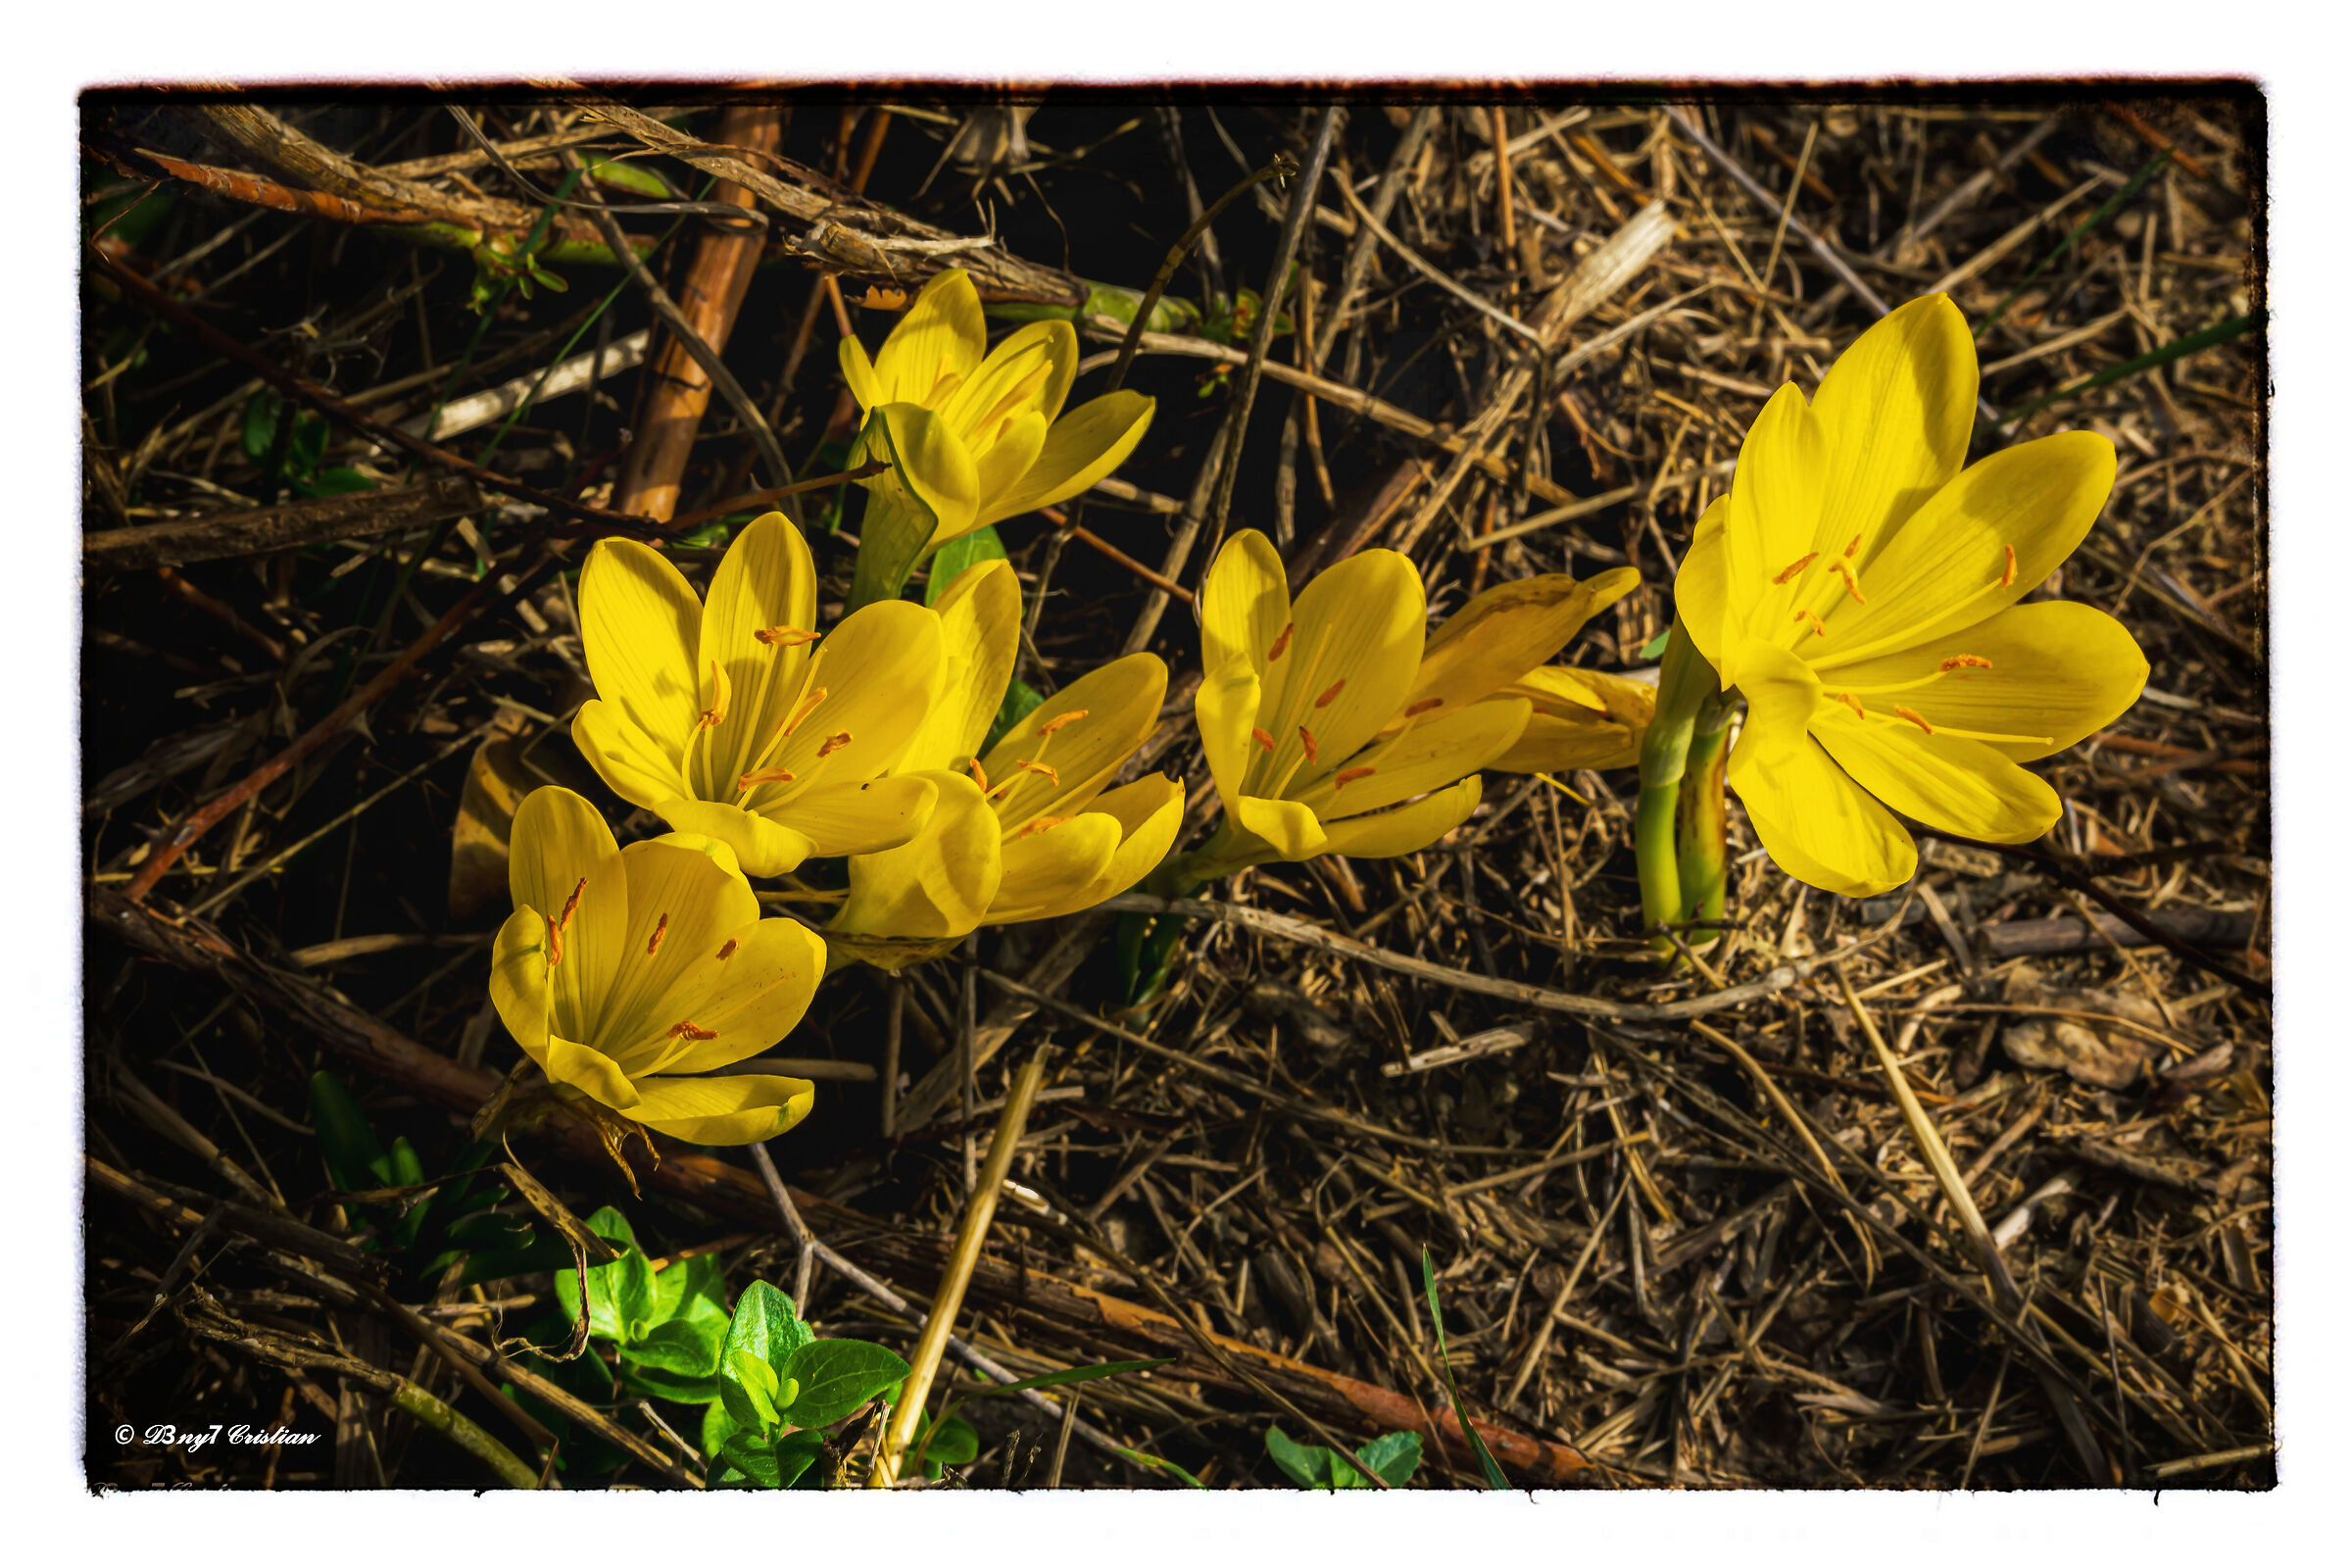 Sternbergia lutea/Zafferanastro yellow...